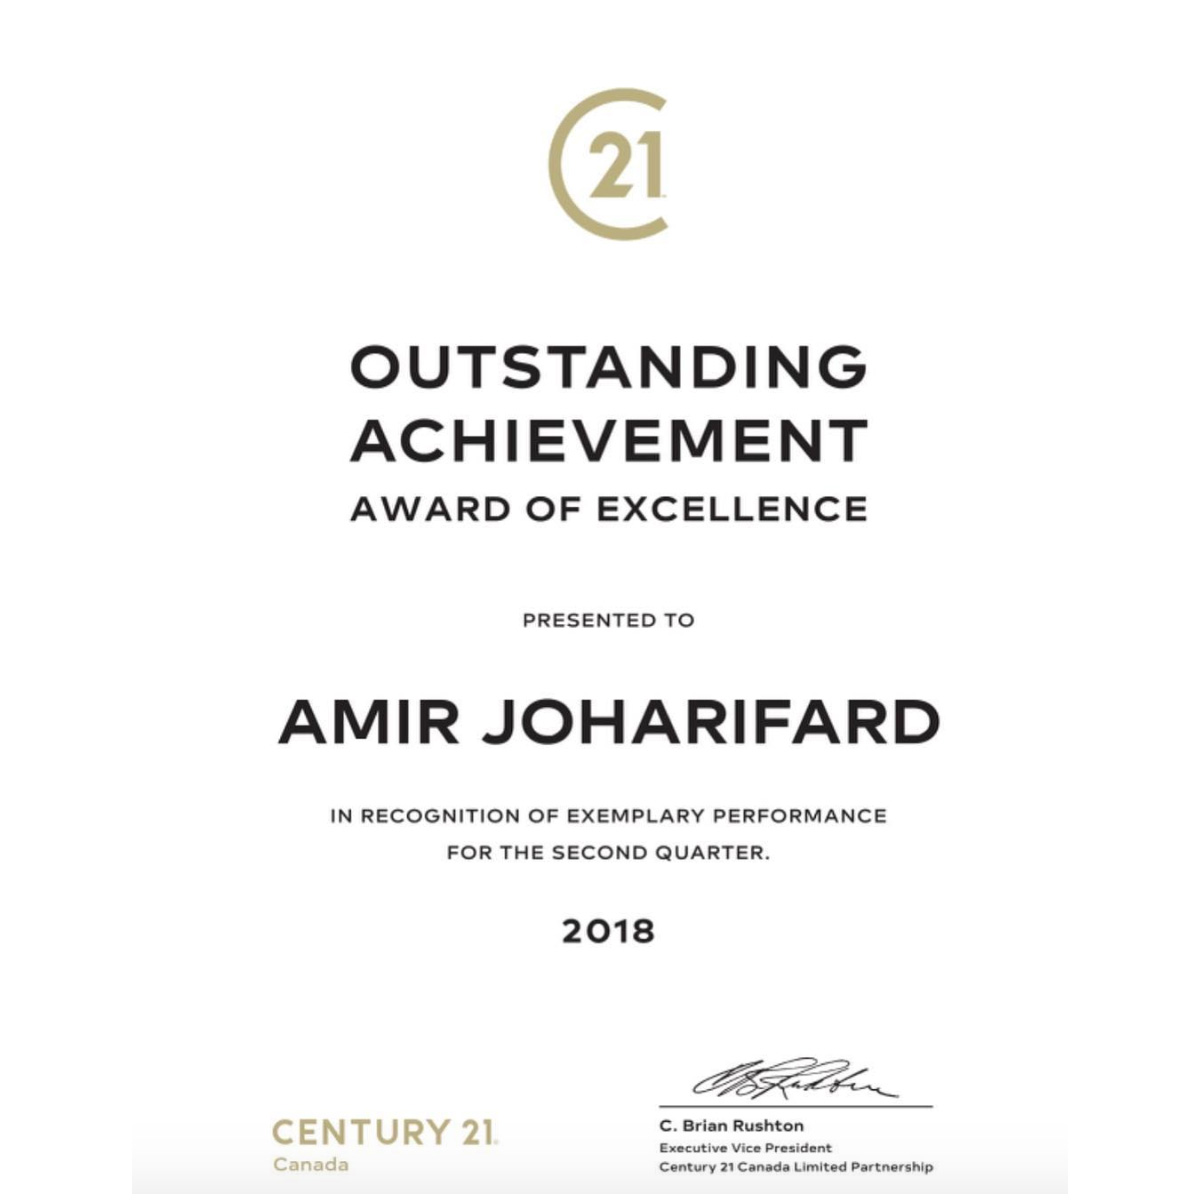 Out standing achievement 2nd quarter 2018